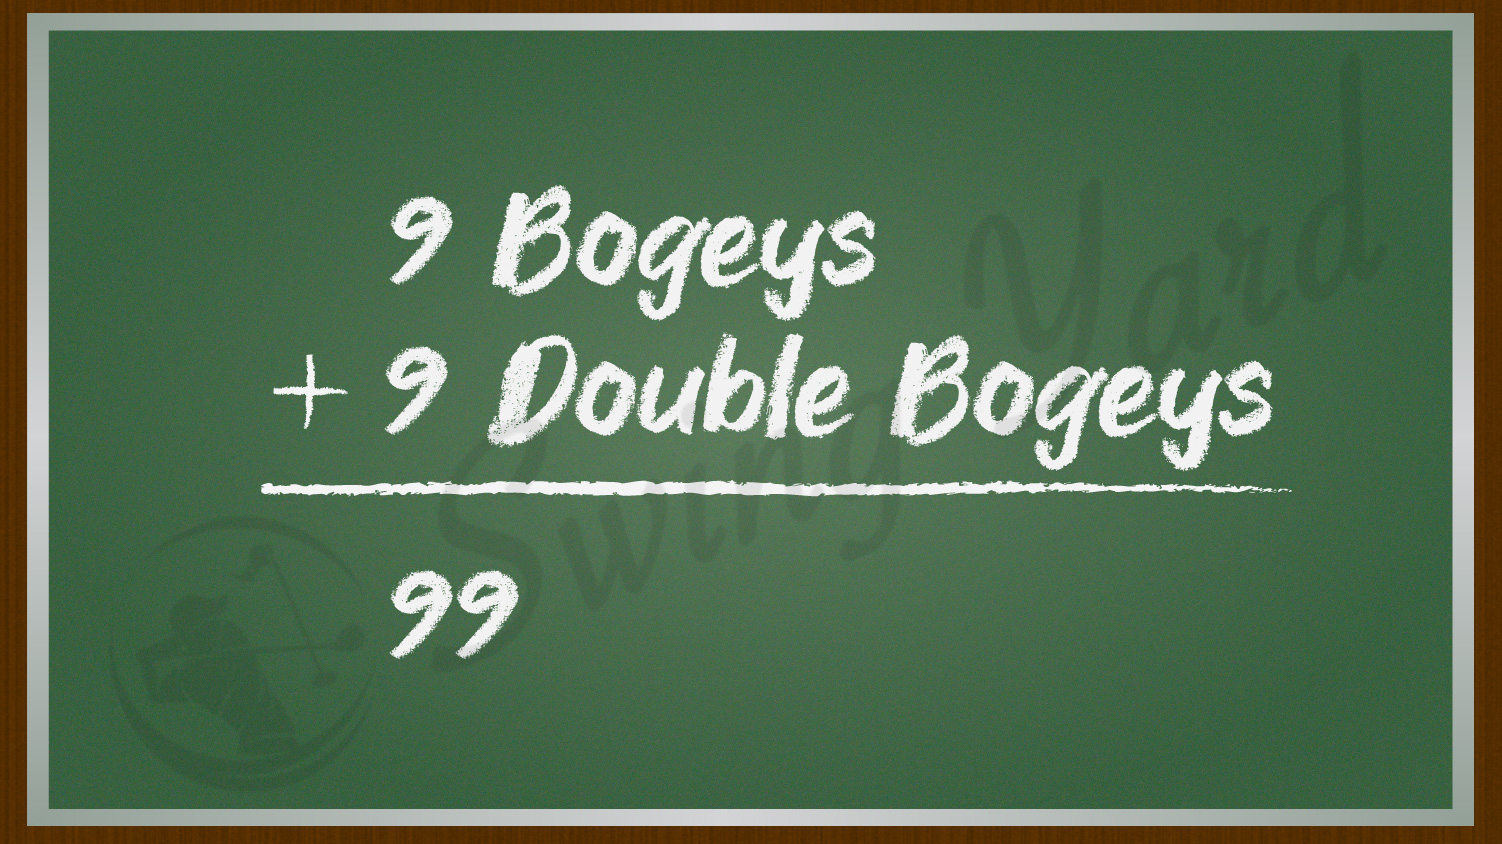 chalkboard adding up bogey and double bogeys